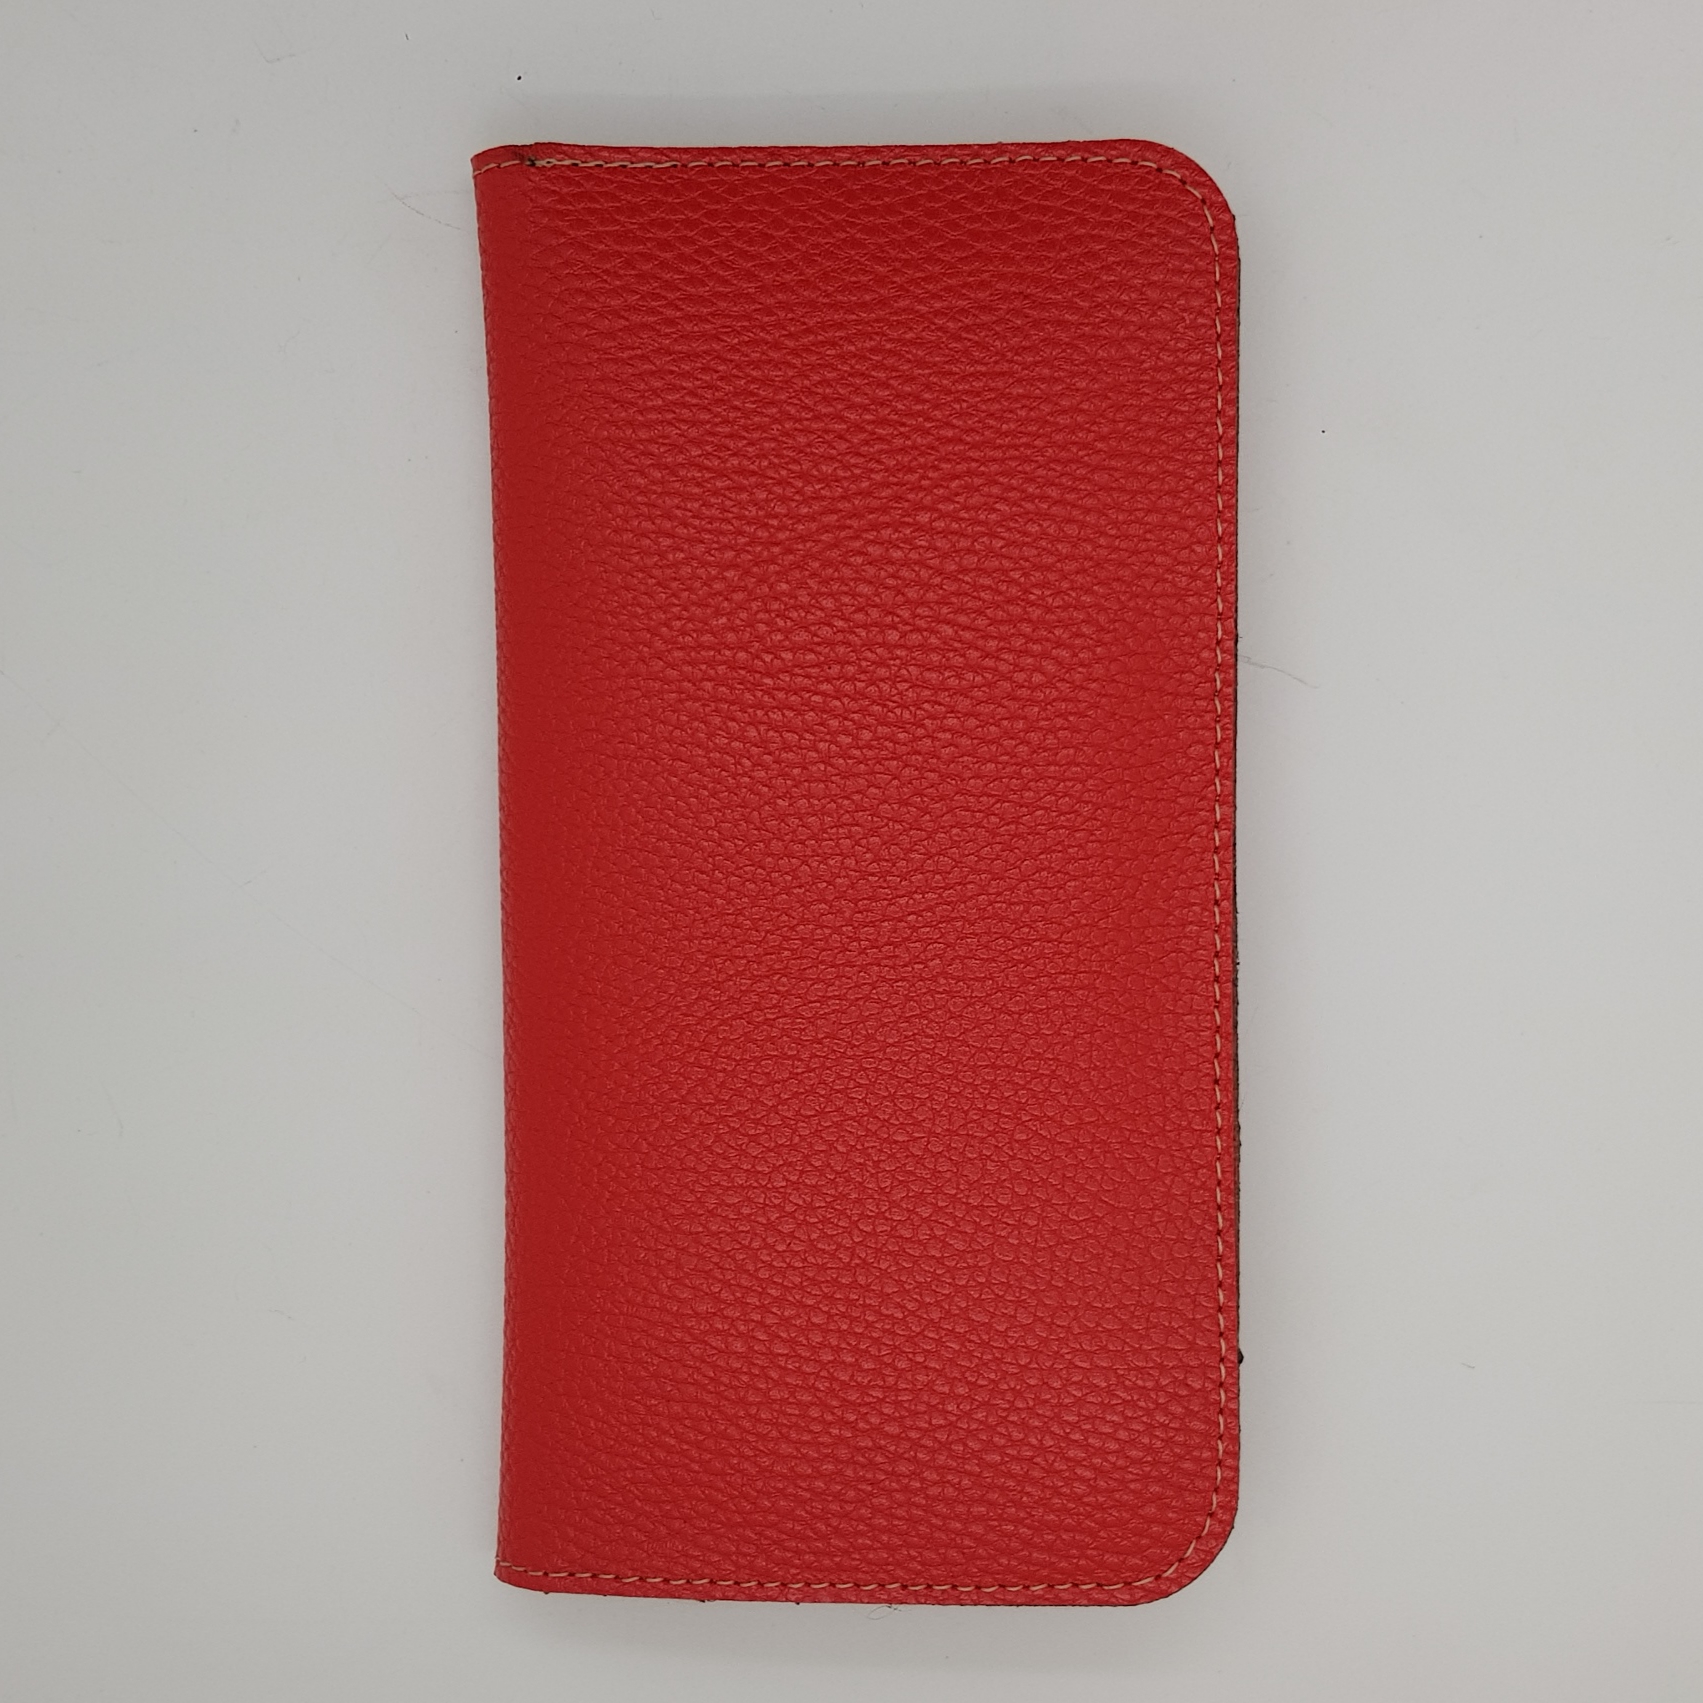 DIYAKO artificial leather wallet, Model 258 